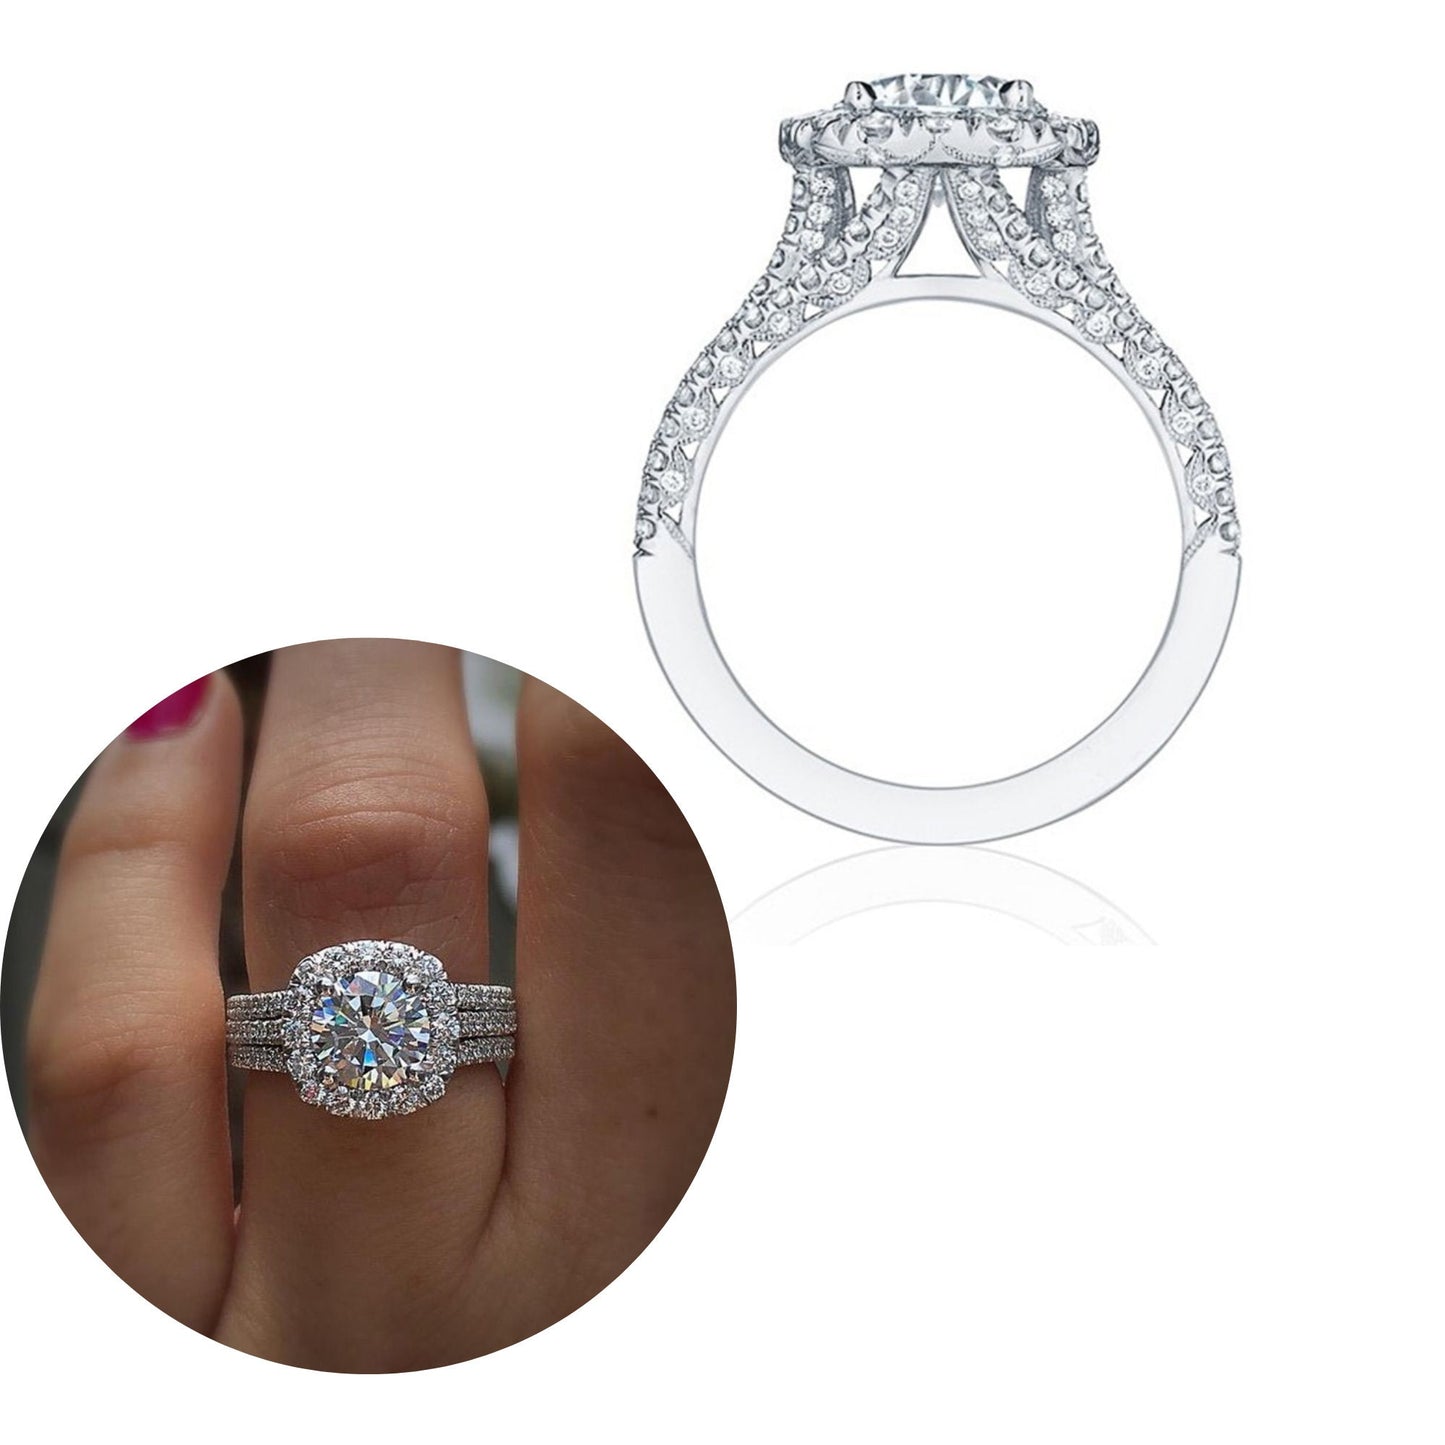 CZ Ring with big diamond CZ Stone, Statement ring fashion Ring Proposal Ring